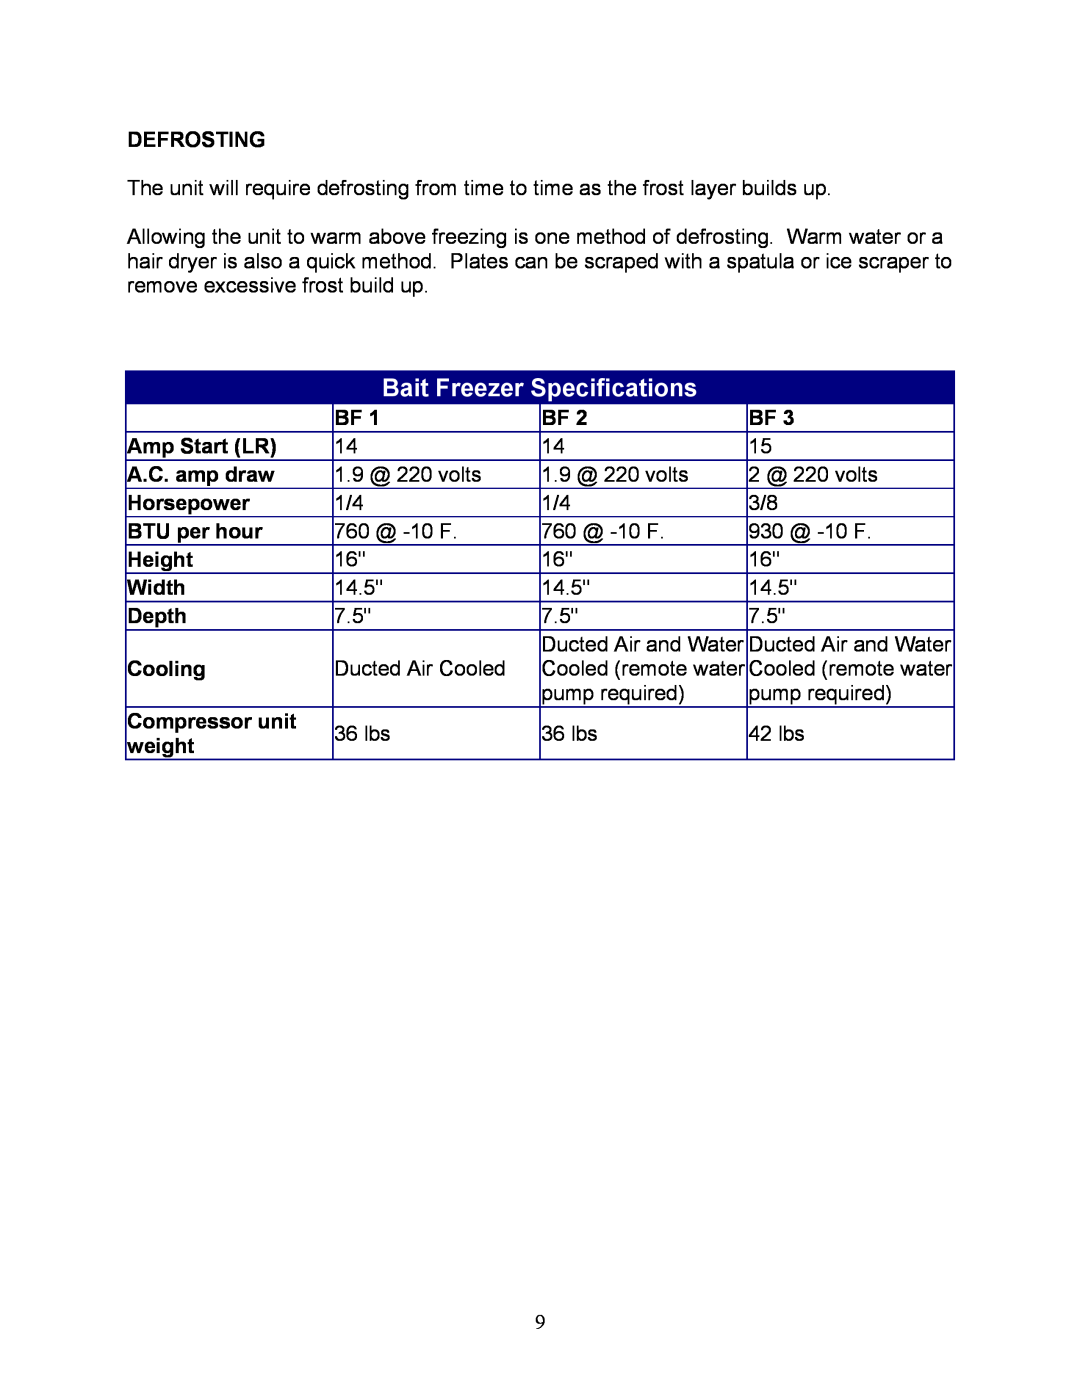 Sea Frost manual Bait Freezer Specifications 